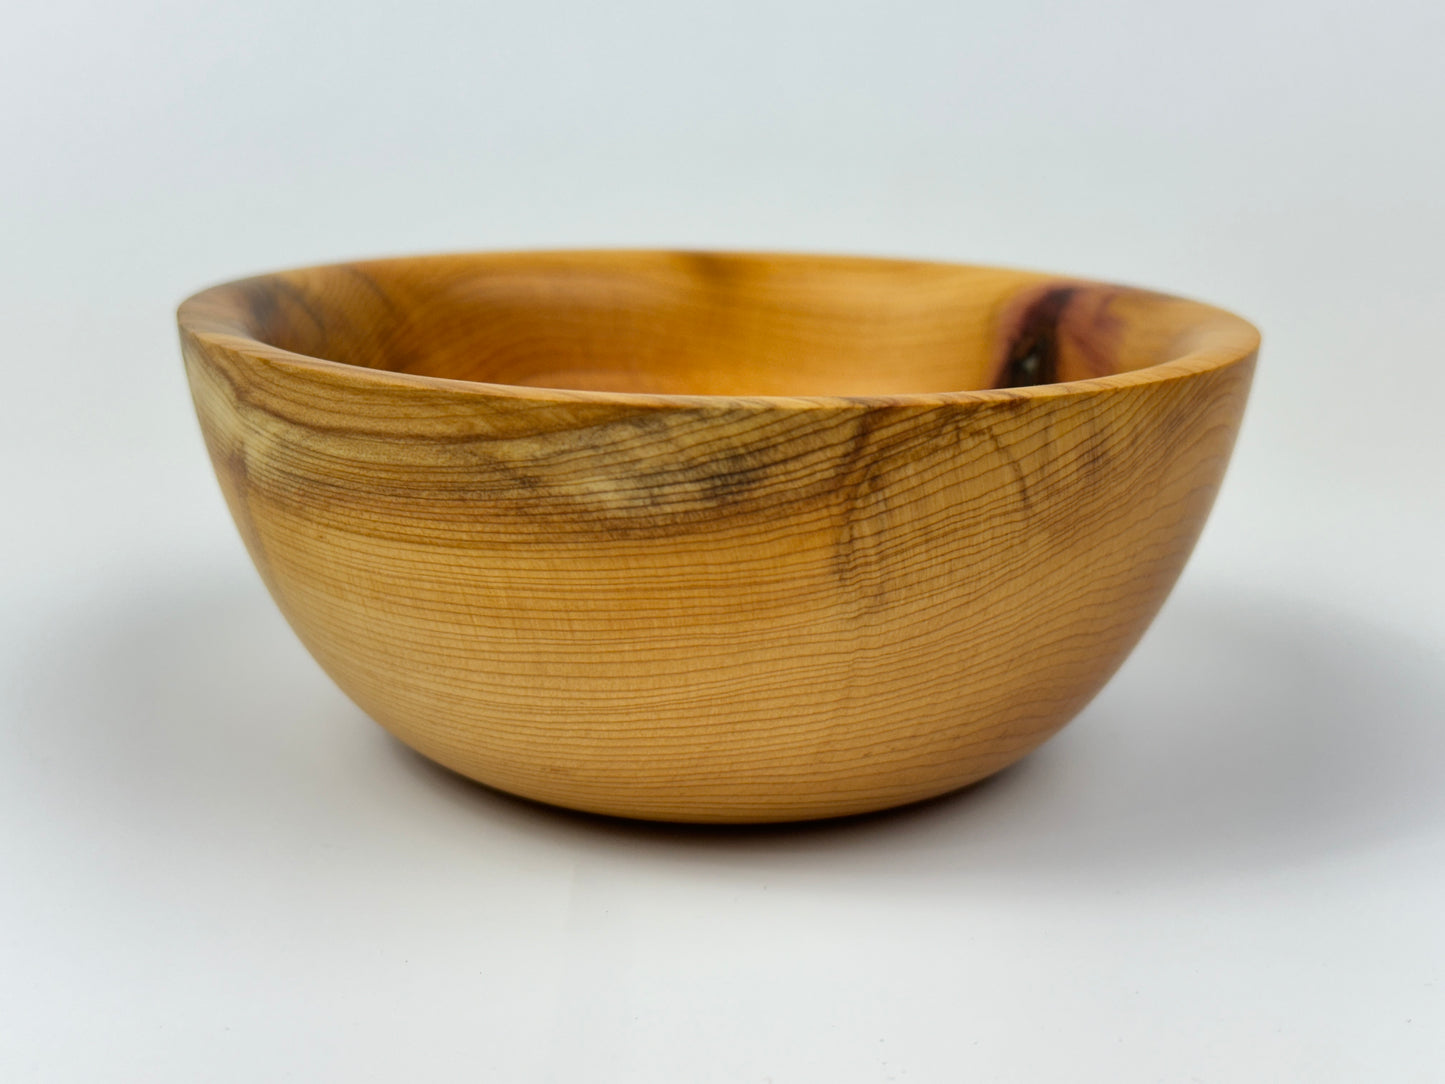 Truro Yew bowl - 12cm